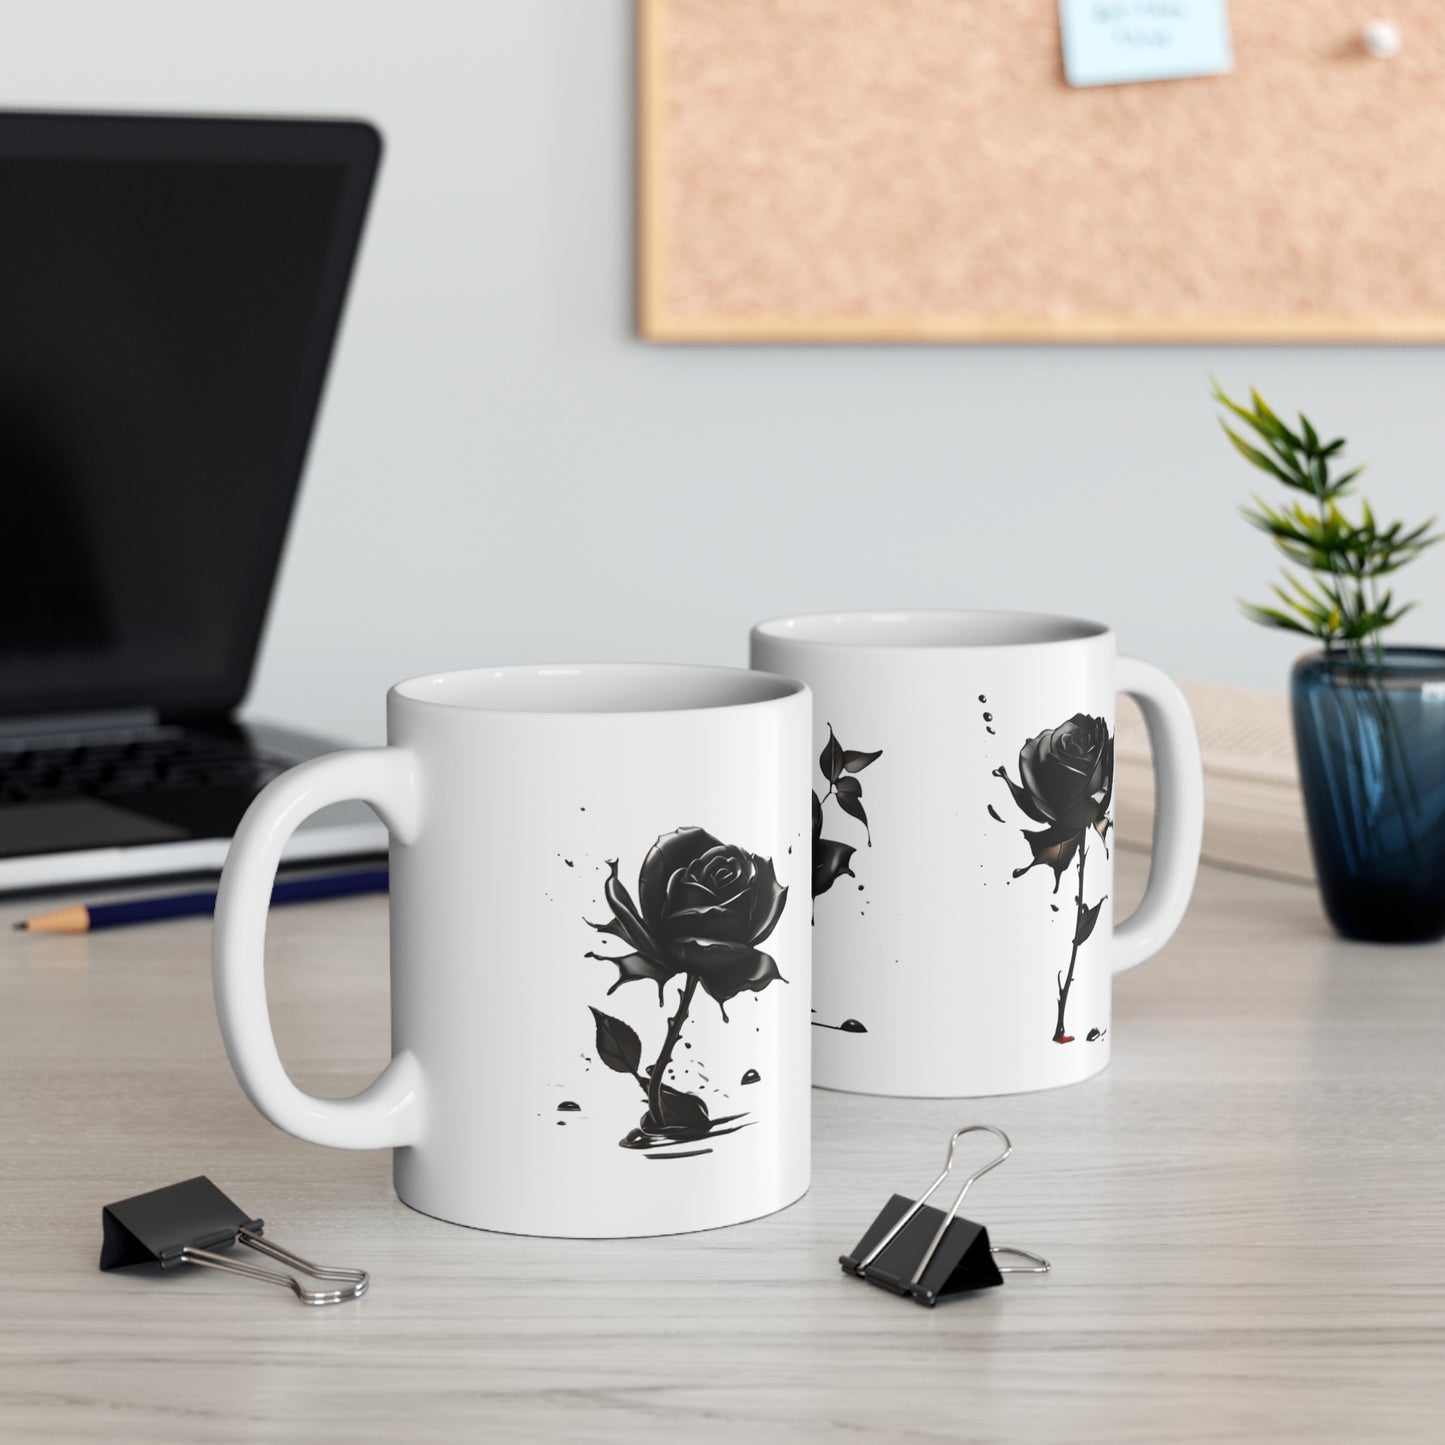 Splatter Black Rose Mug - Ceramic Coffee Mug 11oz